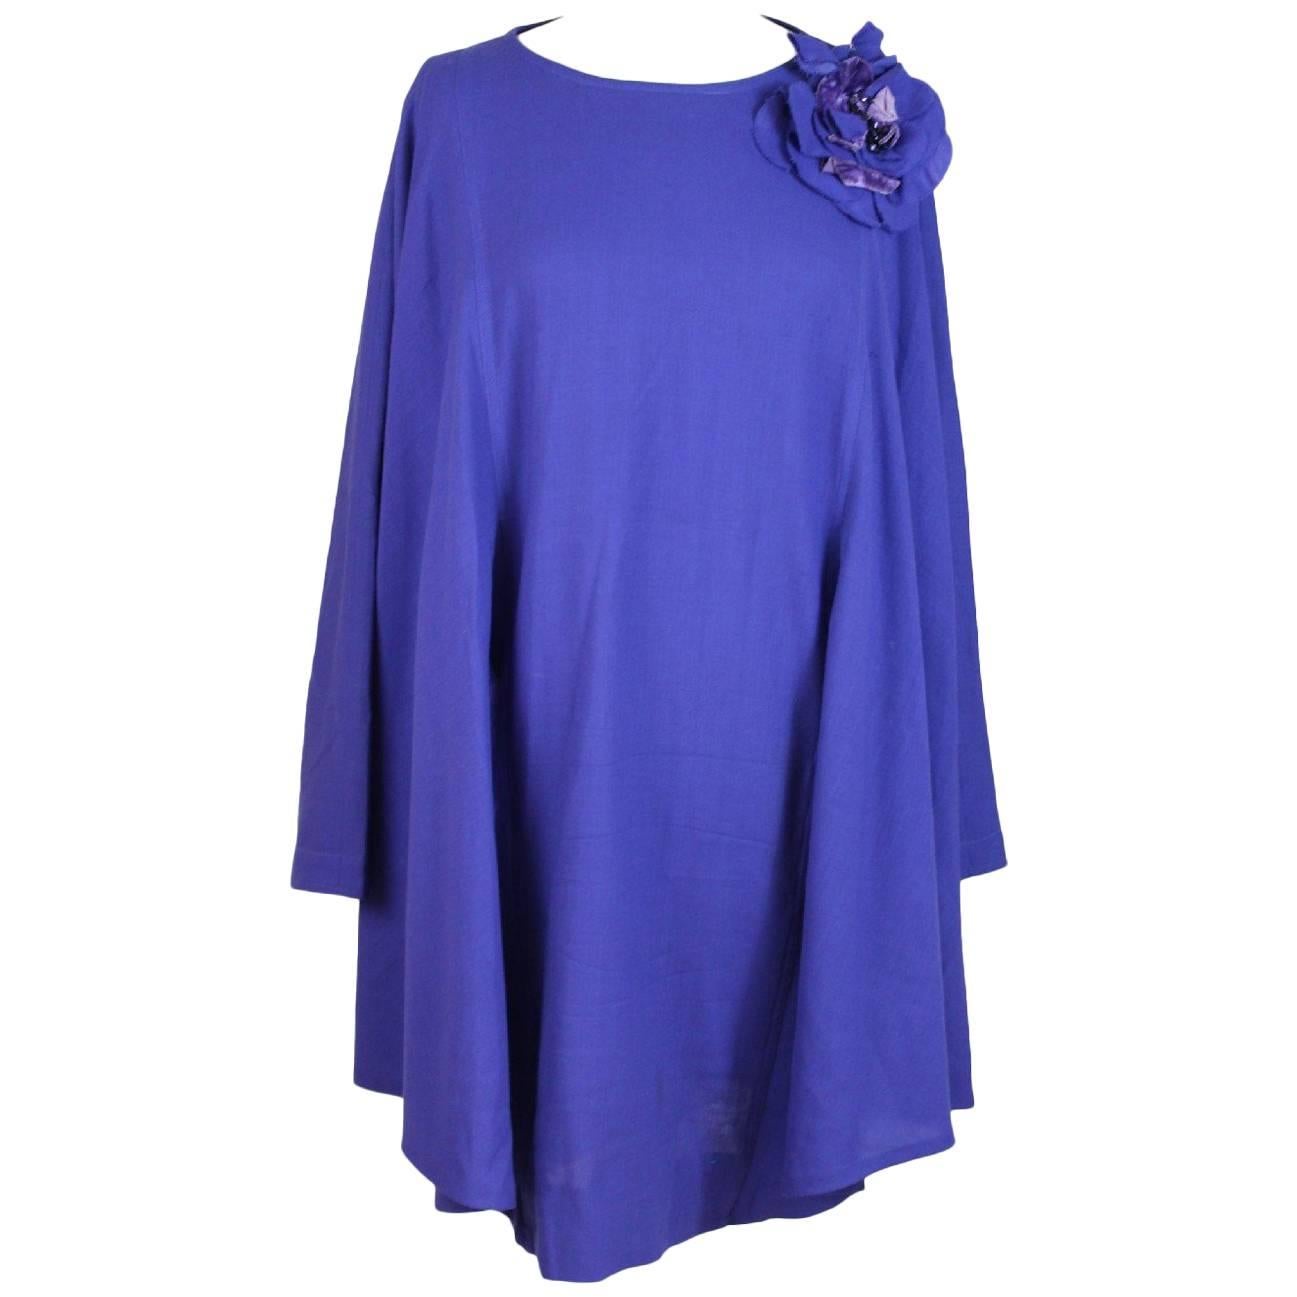 Nazareno Gabrielli wool blue dress tunic flower size 42 women’s 1980s vintage